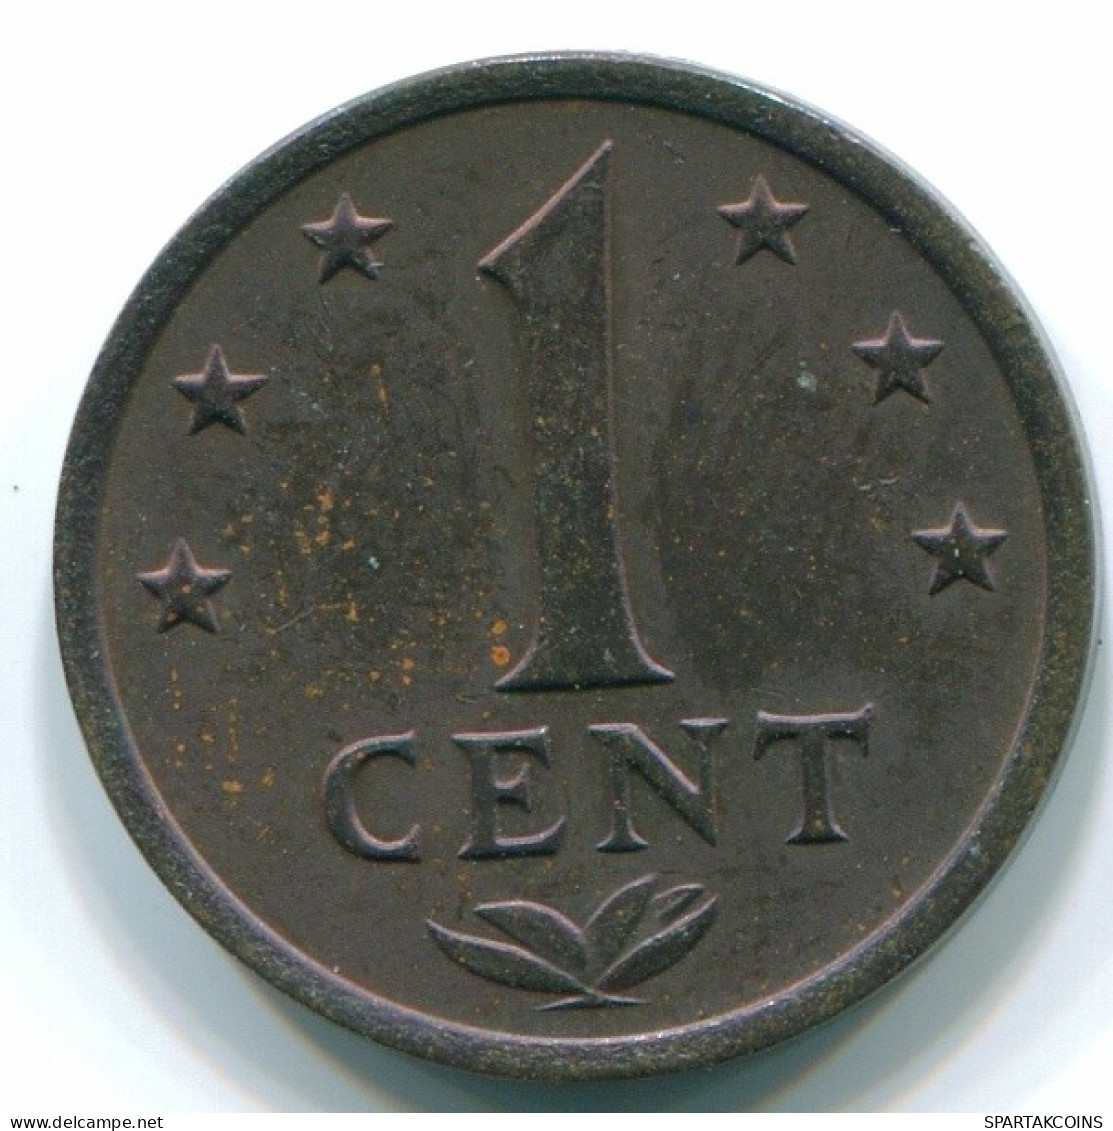 1 CENT 1975 NIEDERLÄNDISCHE ANTILLEN Bronze Koloniale Münze #S10674.D.A - Netherlands Antilles